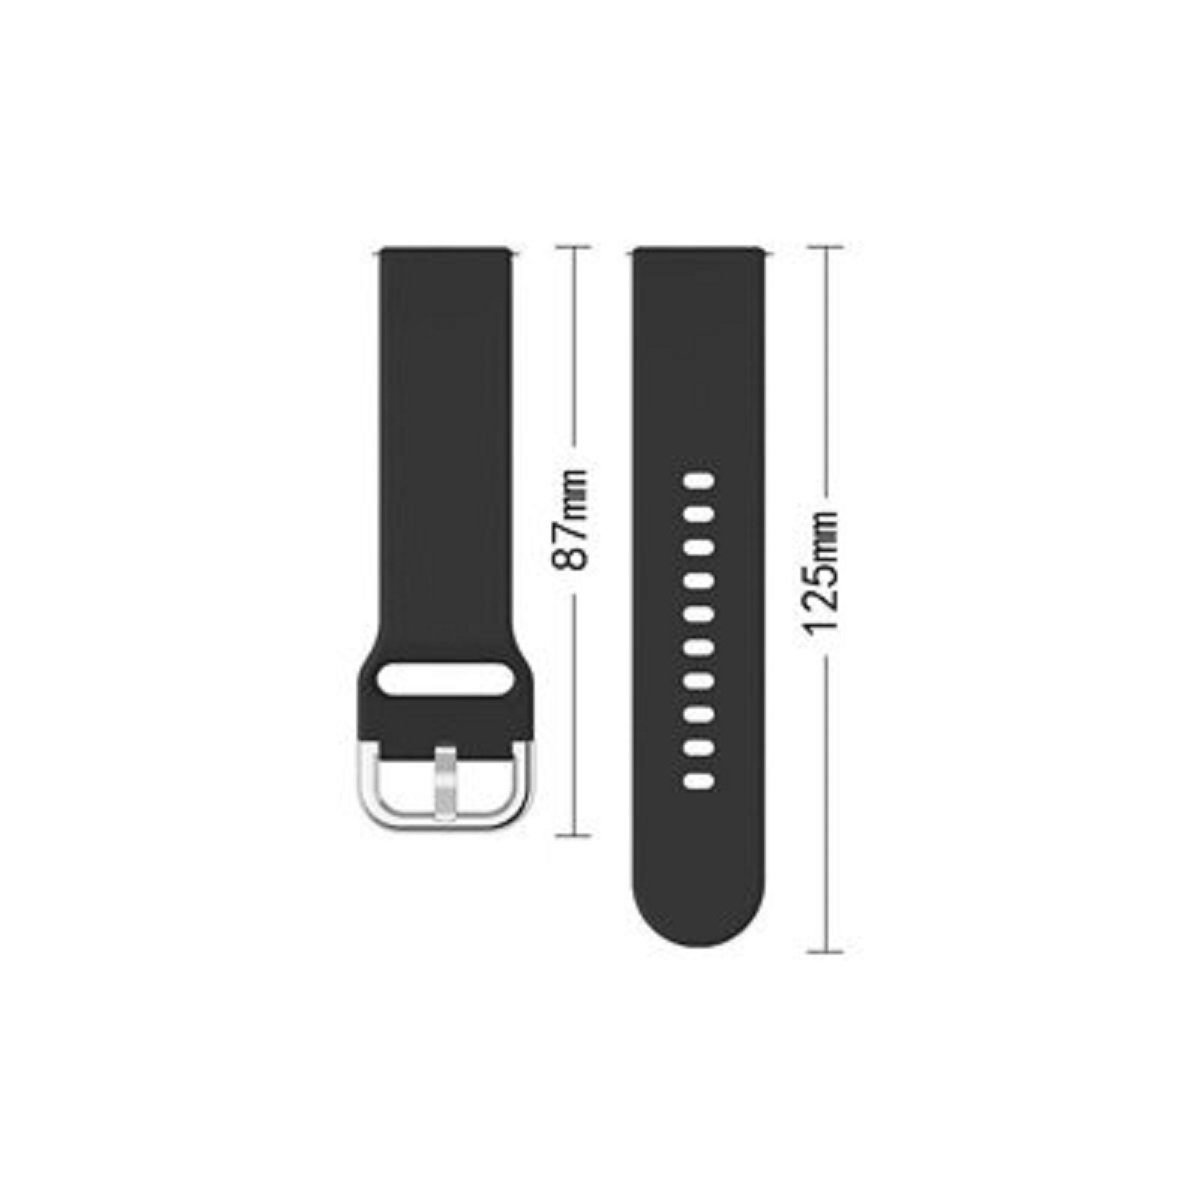 Hurtel Uhrenarmband Silikonarmband Ersatz Dunkelblau Breite universal Smartwatch-Armband 22mm